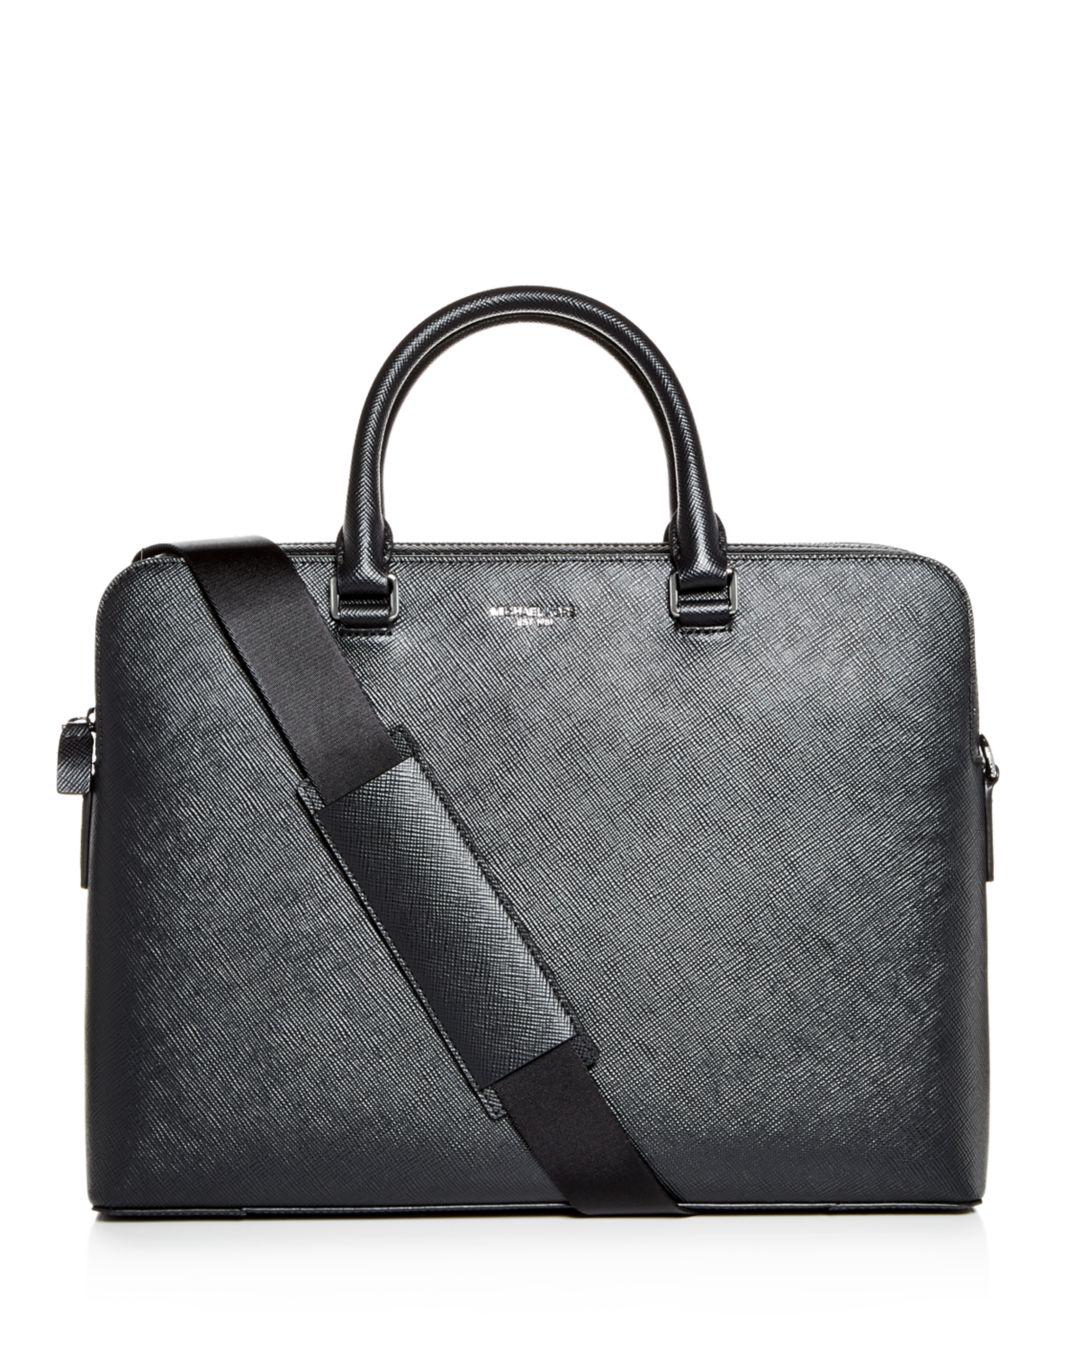 Michael Kors Harrison Crossgrain Leather Briefcase in Black for Men - Lyst